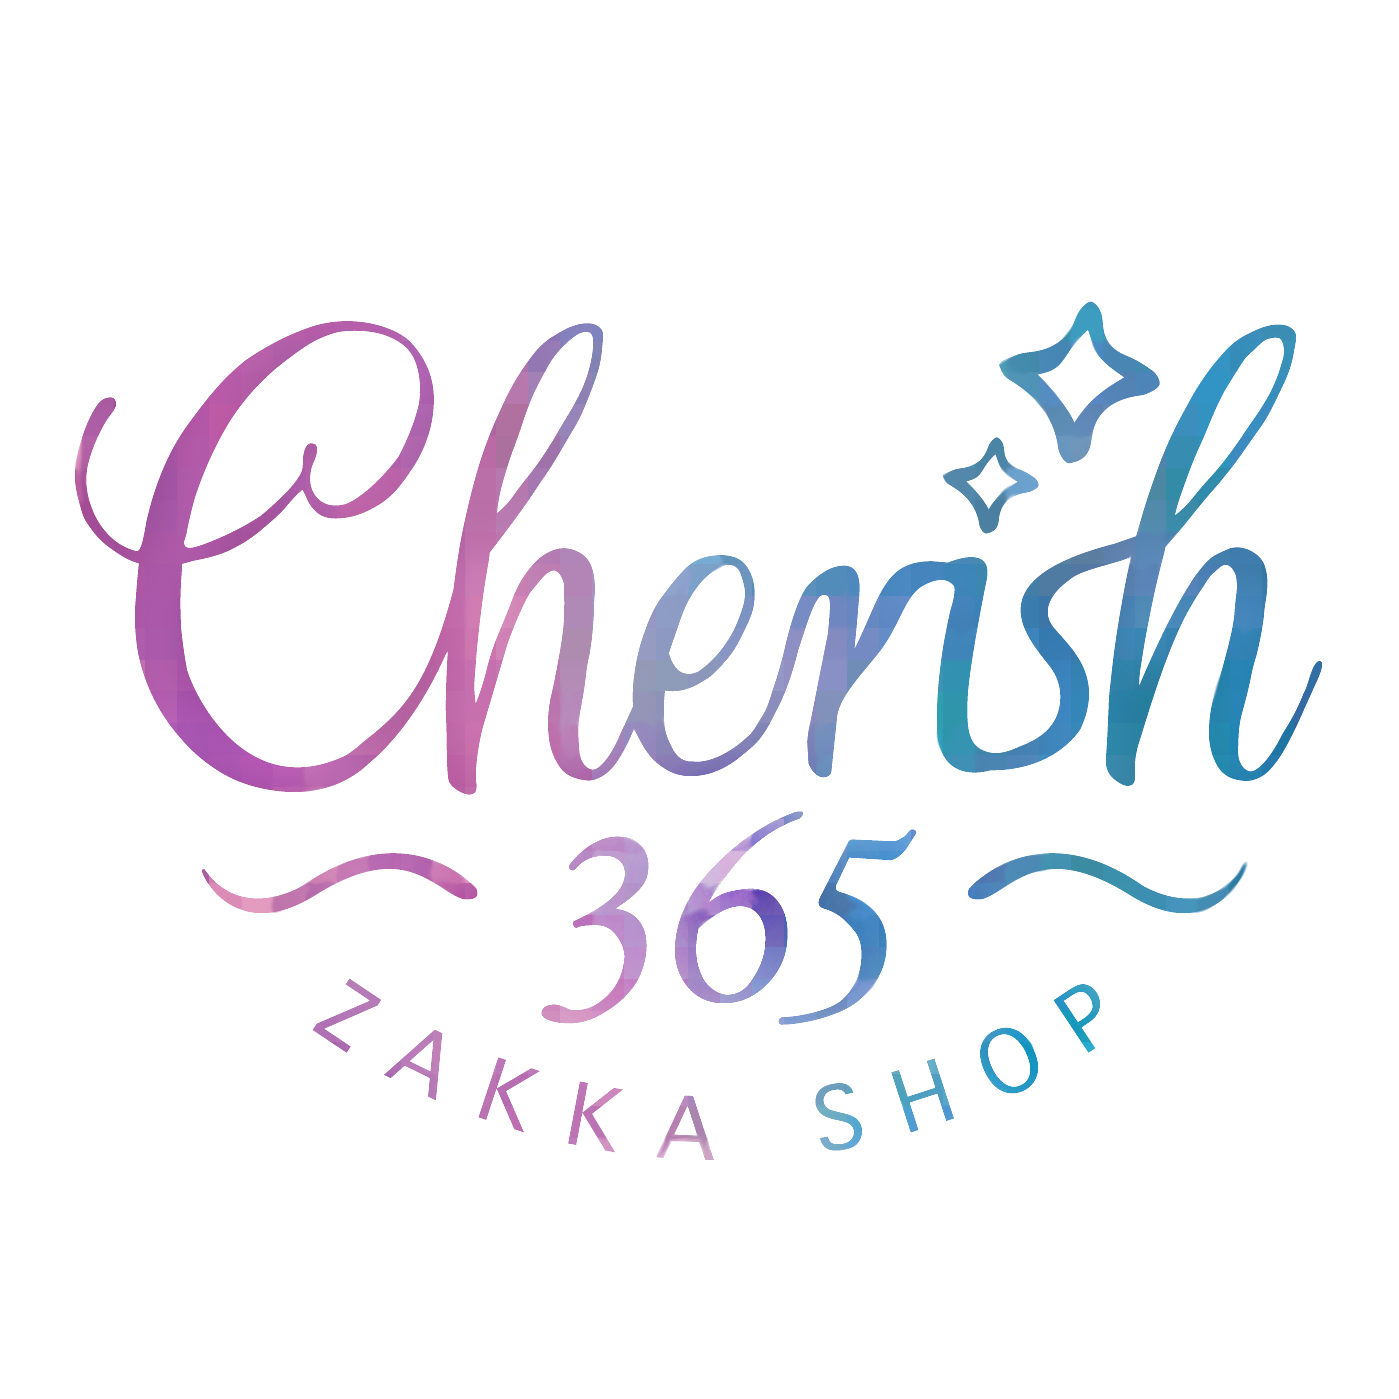 Cherish365 Zakka